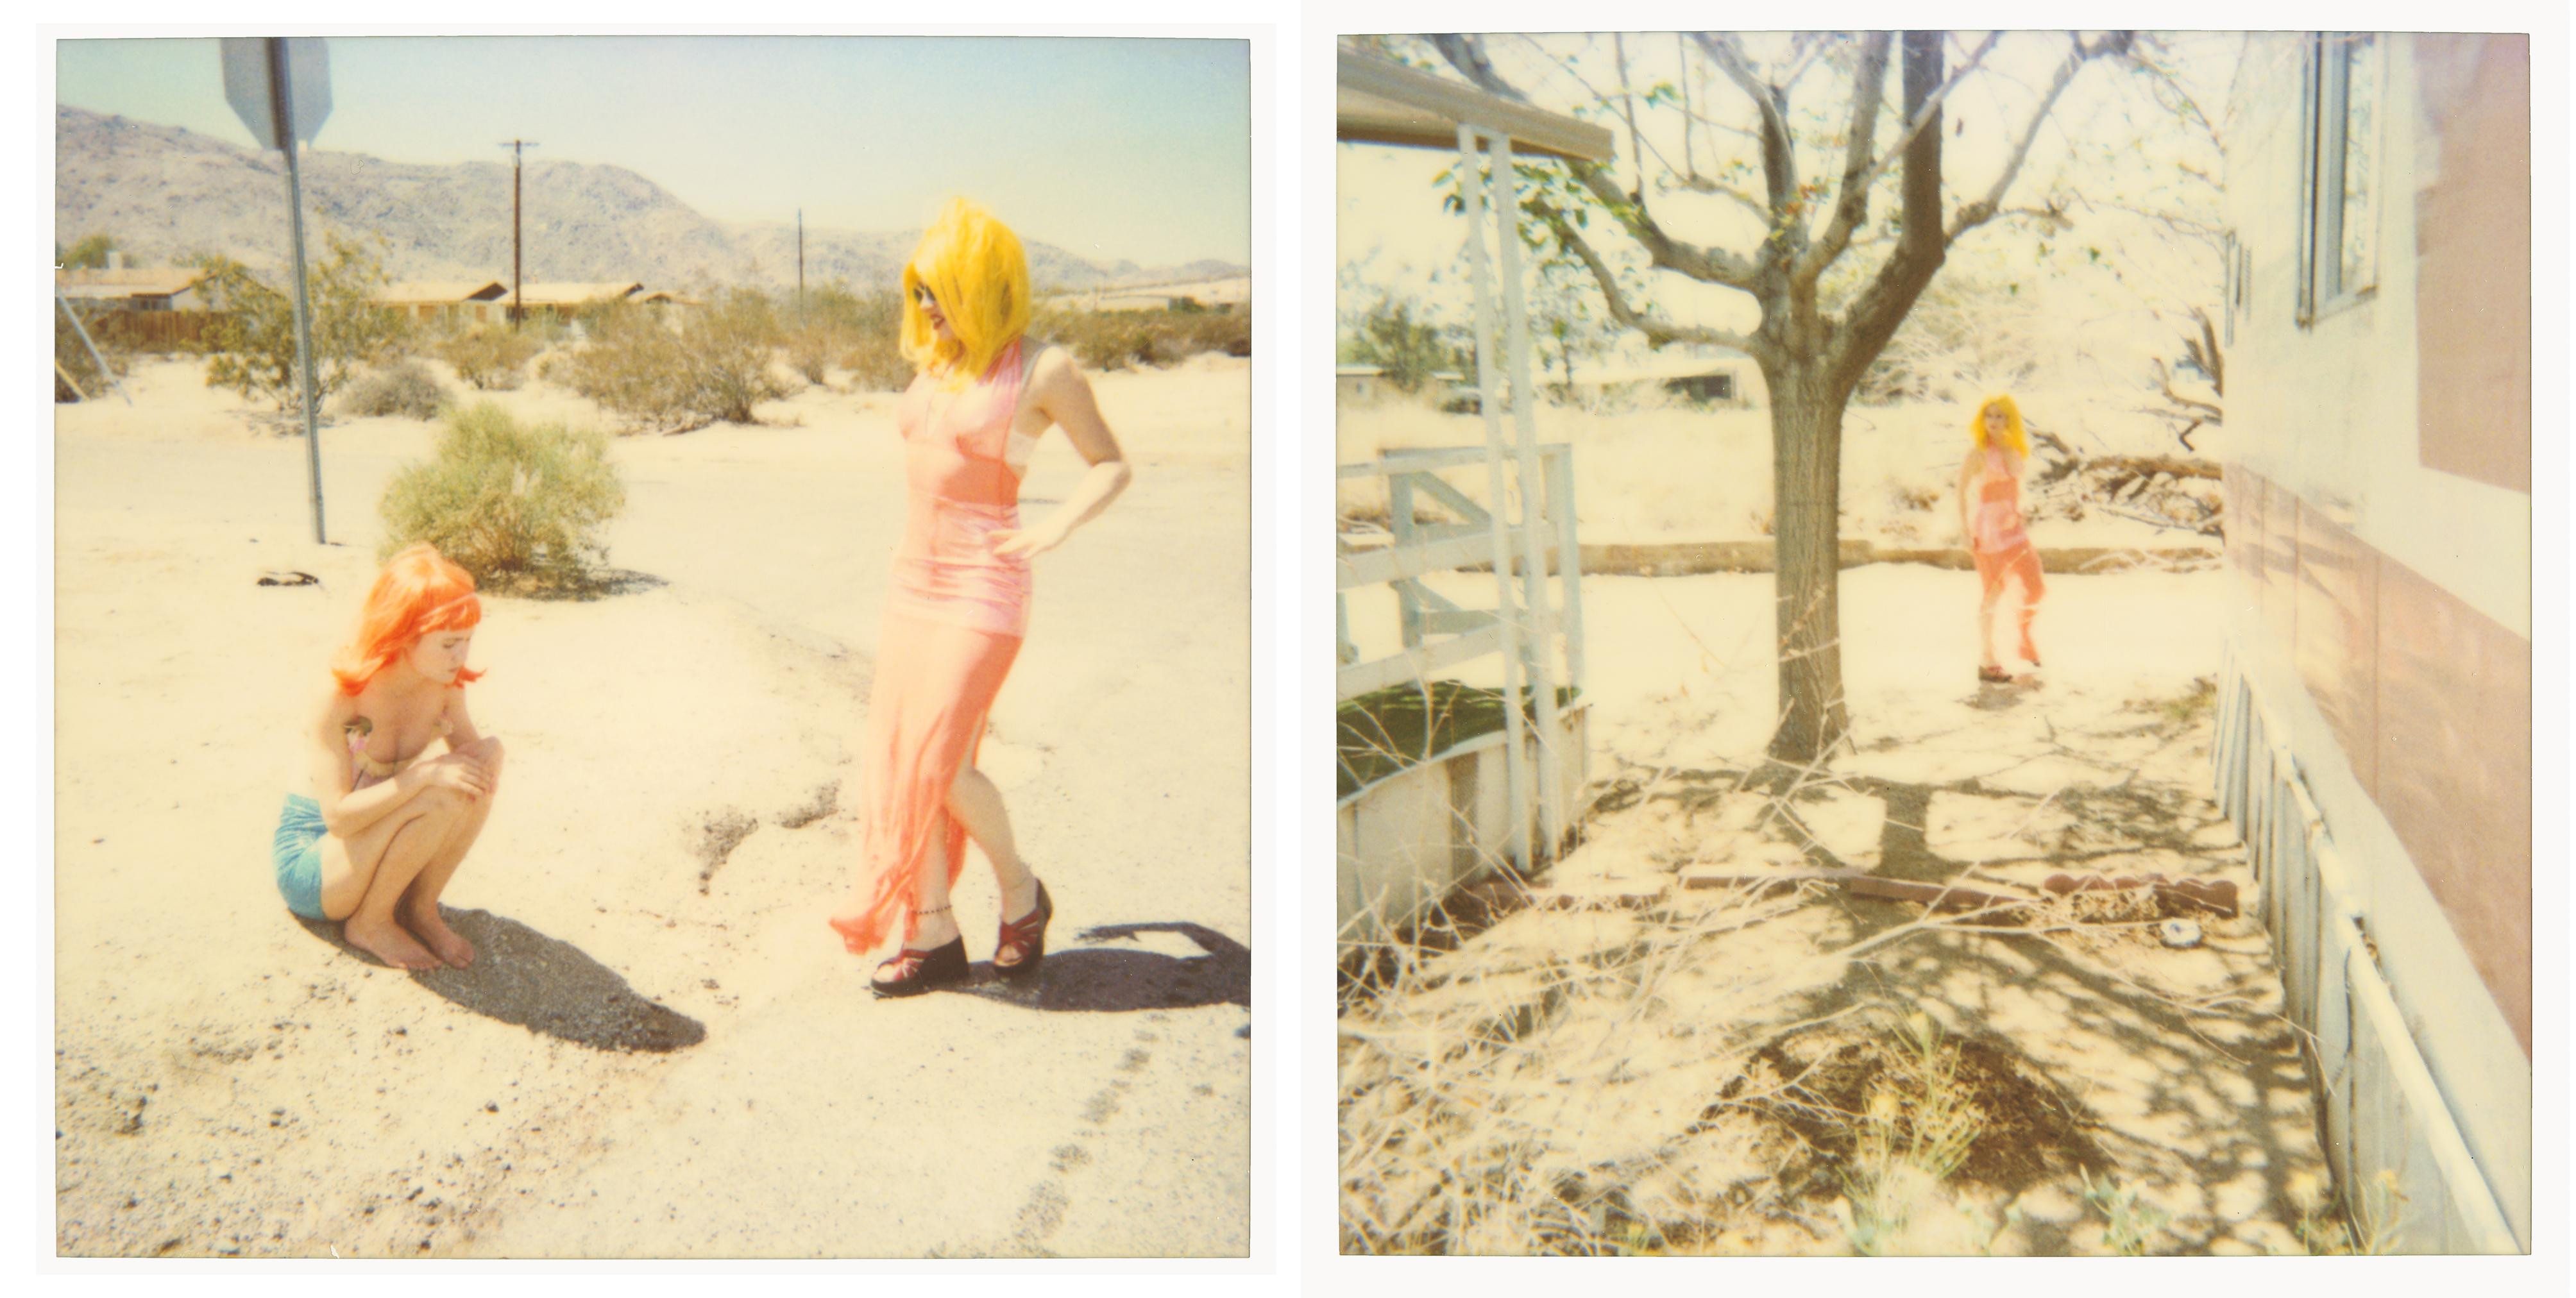 Stefanie Schneider Portrait Photograph - Radha and Max on Dirt Road (29 Palms, CA) - analog, Polaroid, Contemporary